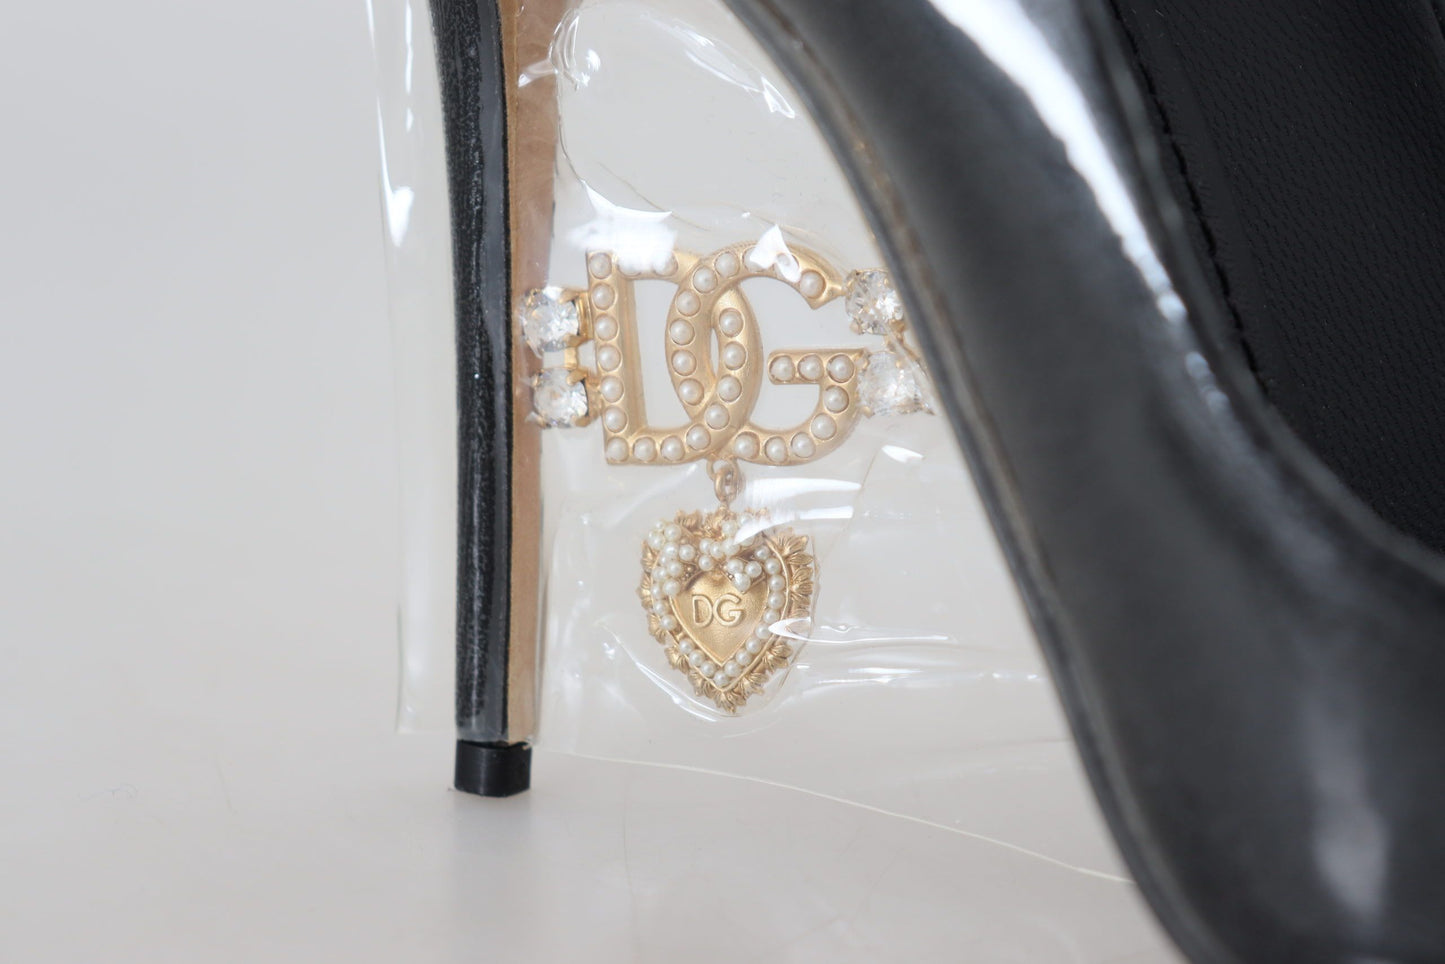 Elegant Black Gold Detail Heels Pumps